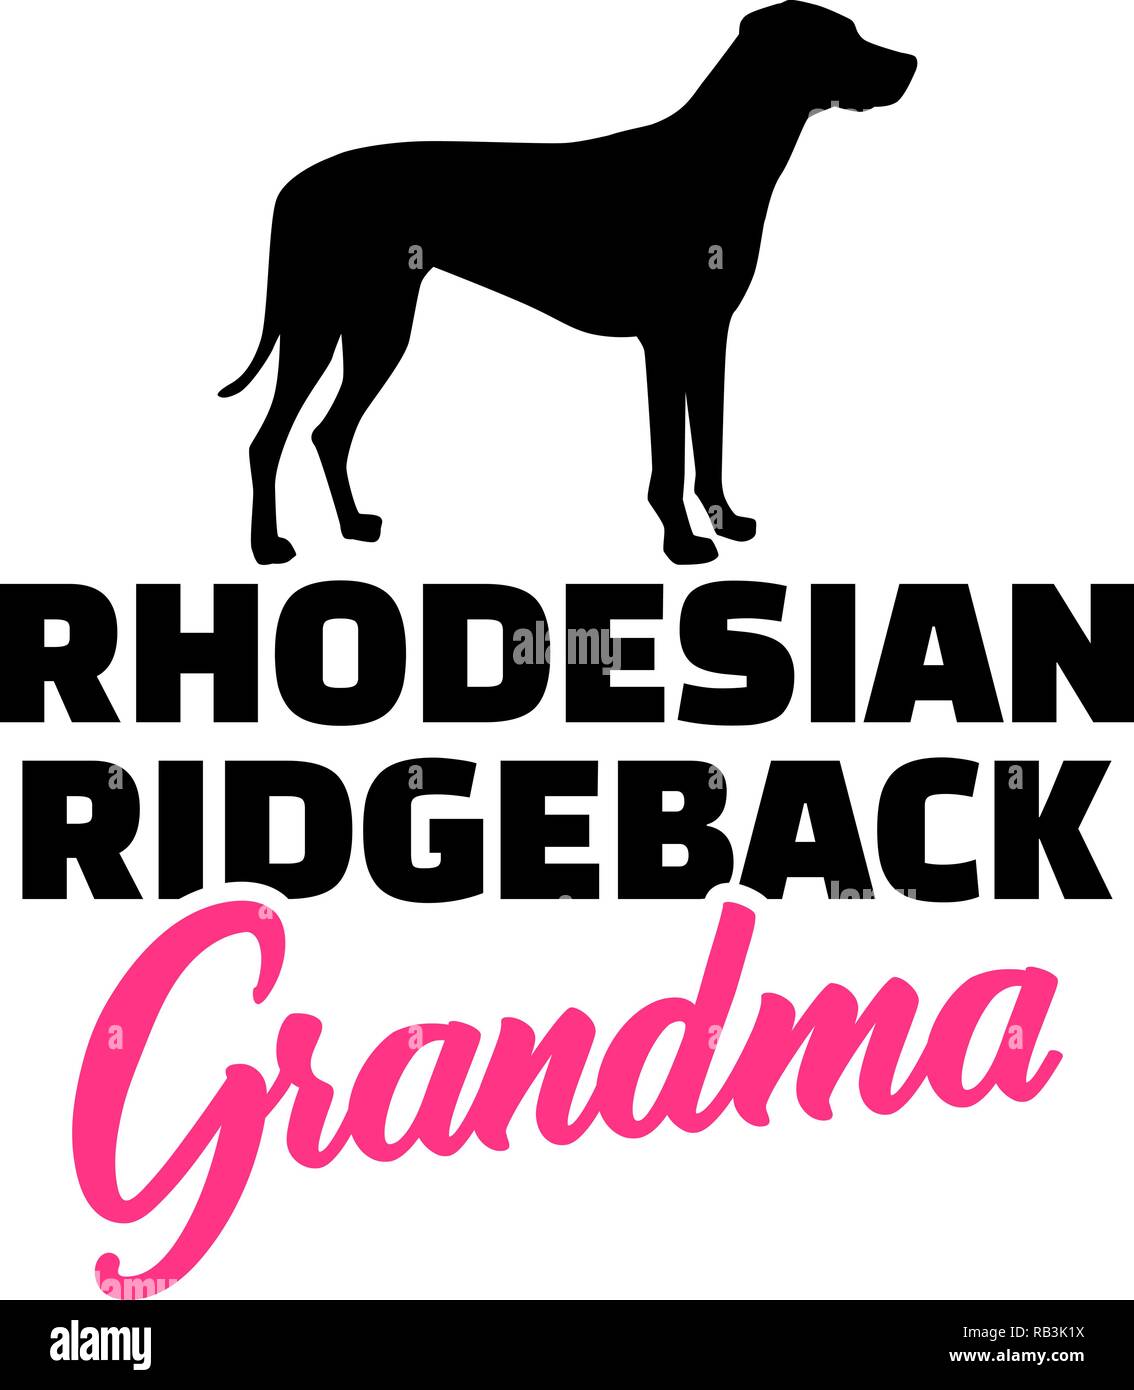 Rhodesian Ridgeback Grandma Silhouette in Schwarz Stock Vektor